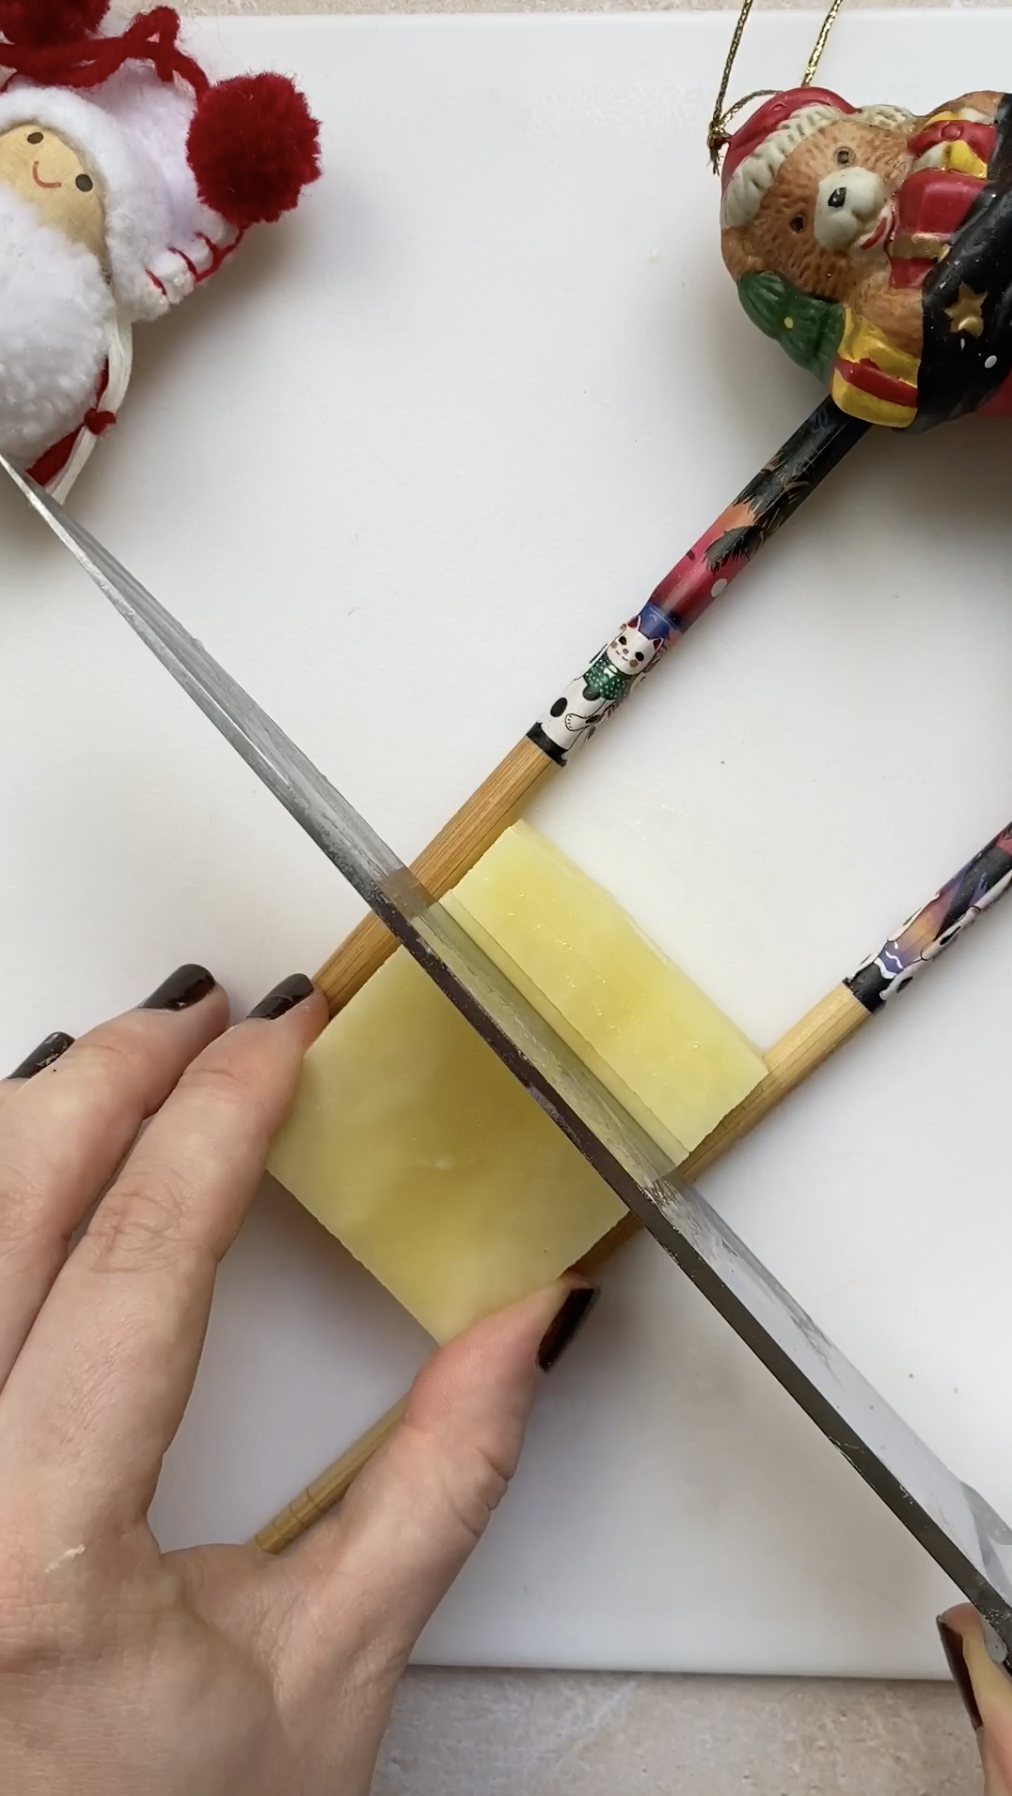 A hand holding a knife, cutting a potato horizontally.